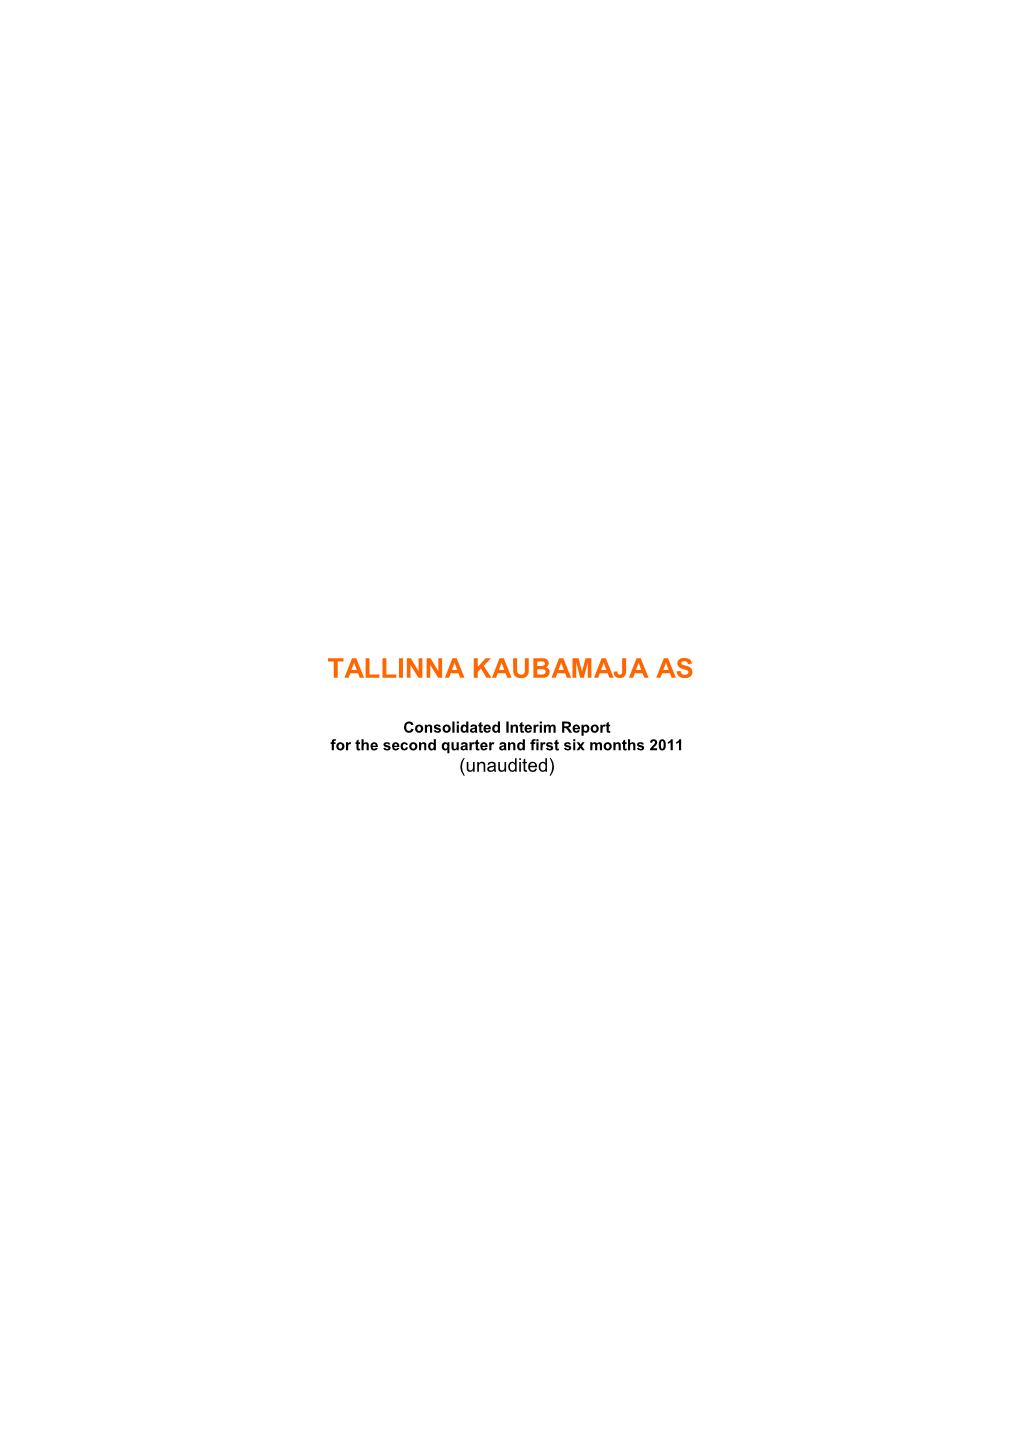 AS Tallinna Kaubamaja Have Been Listed in the Main List of Securities of the Tallinn Stock Exchange